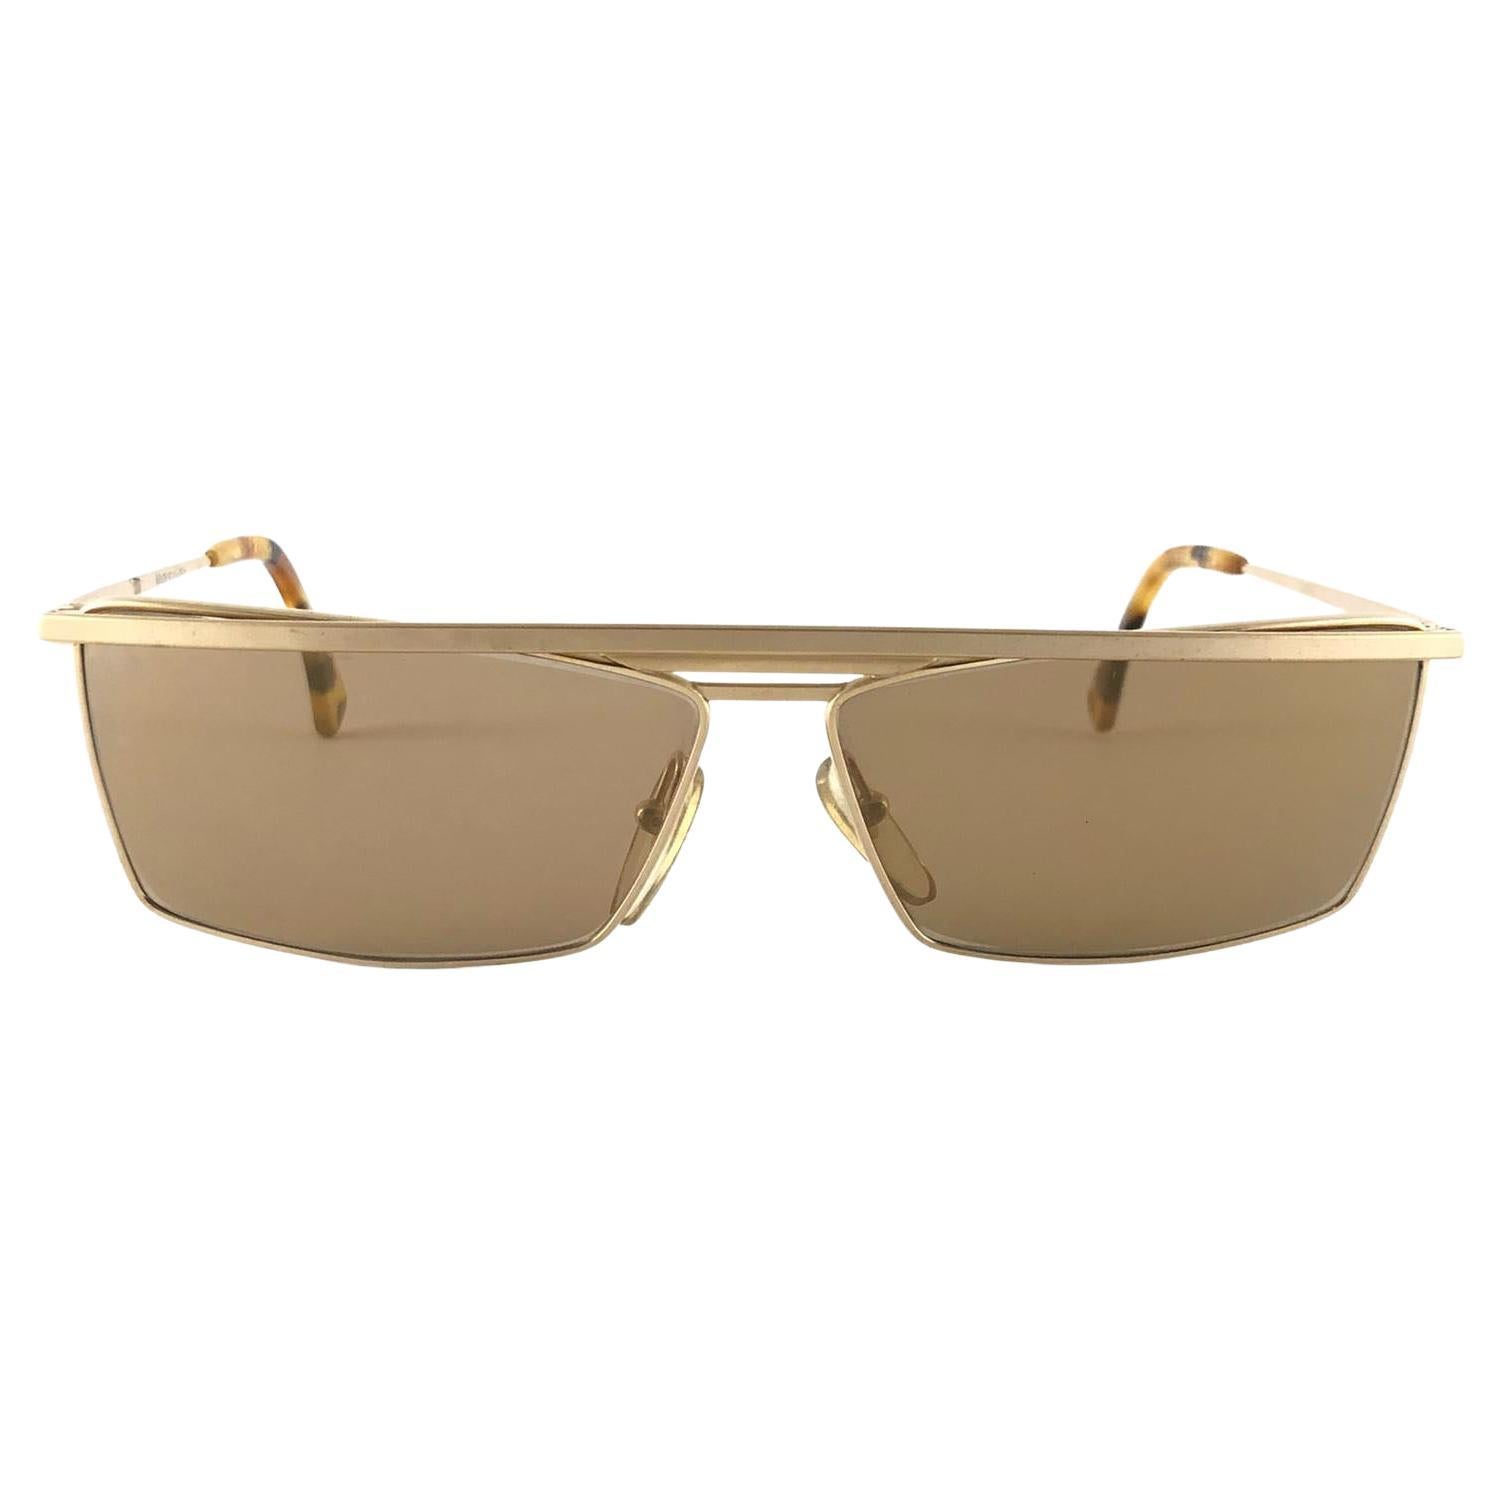 New Vintage Rare Alain Mikli  663 Gold Mask Sunglasses 1990 For Sale